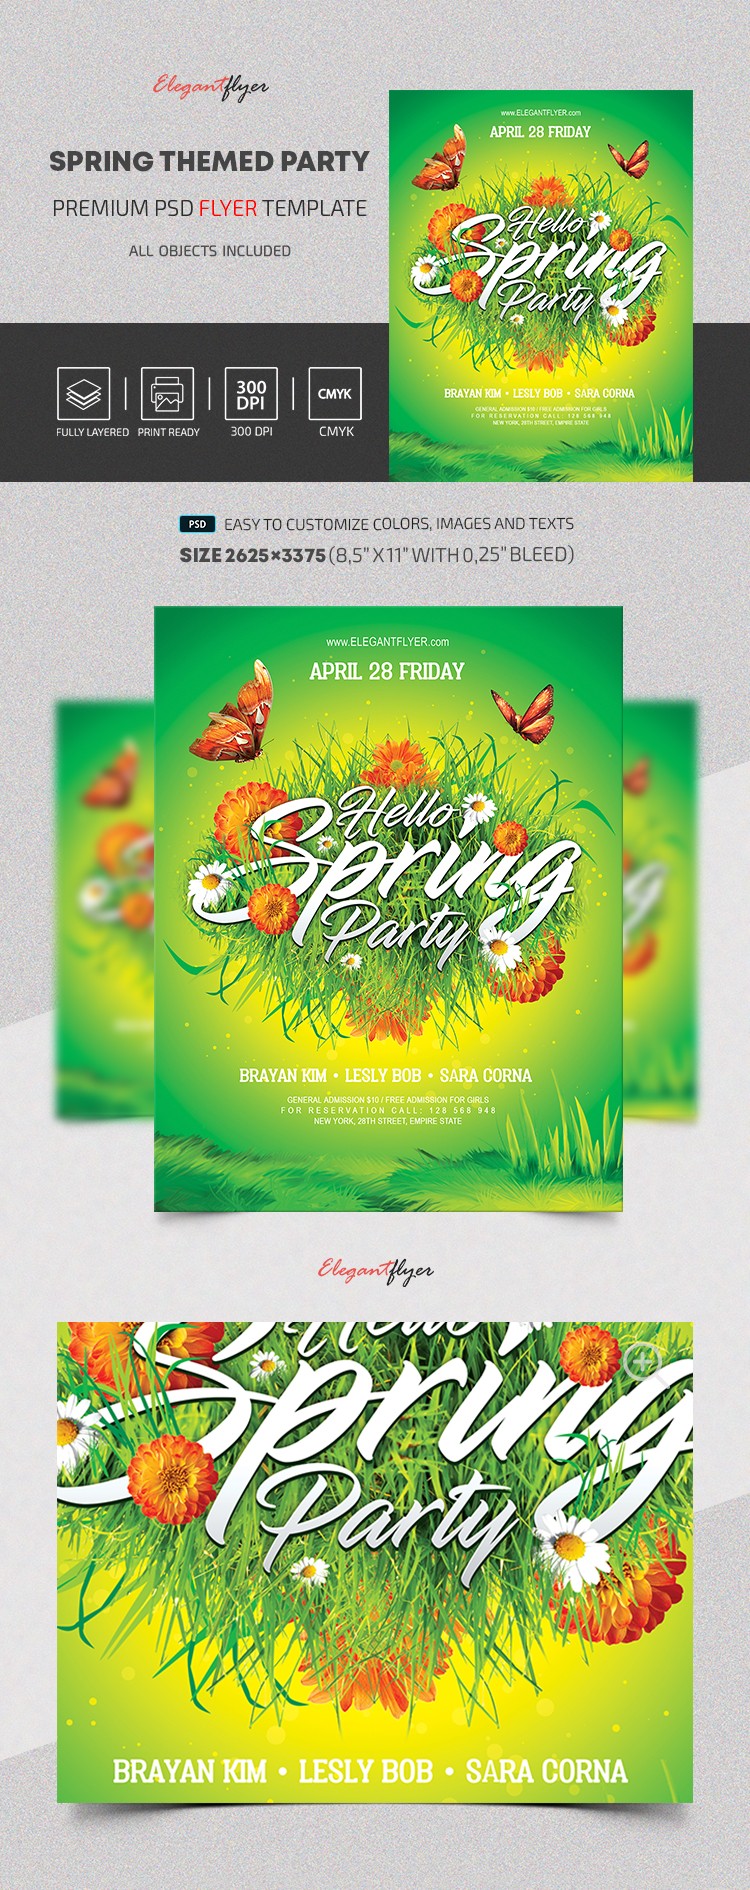 Spring Themed Party by ElegantFlyer